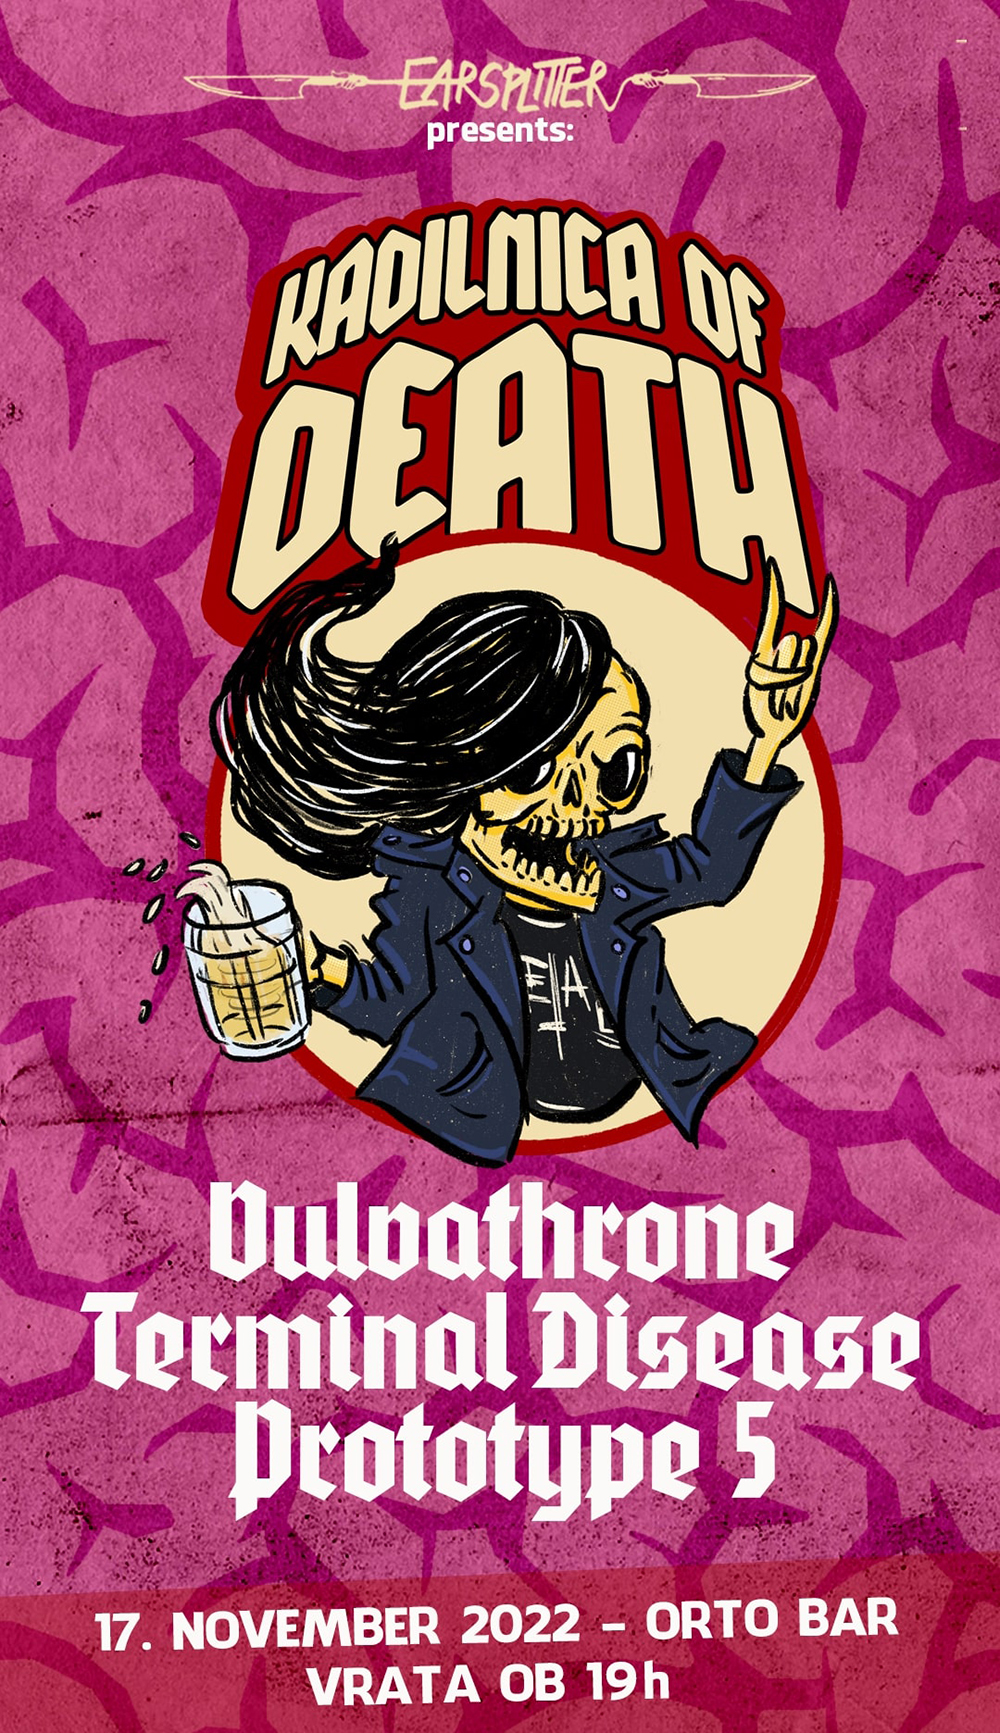 17.11.2022 - Kadilnica of Death: Vulvathrone (Slo), Terminal Disease (Slo), Protype 5 (Slo) @ Orto Bar, Ljubljana